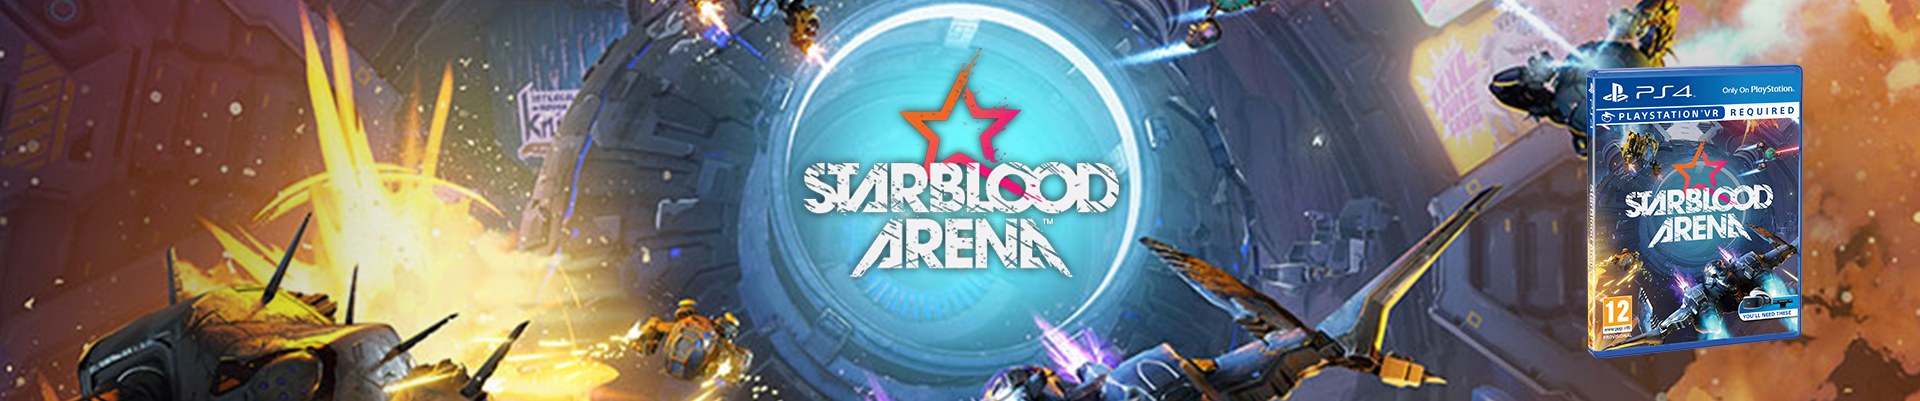 star blood arena